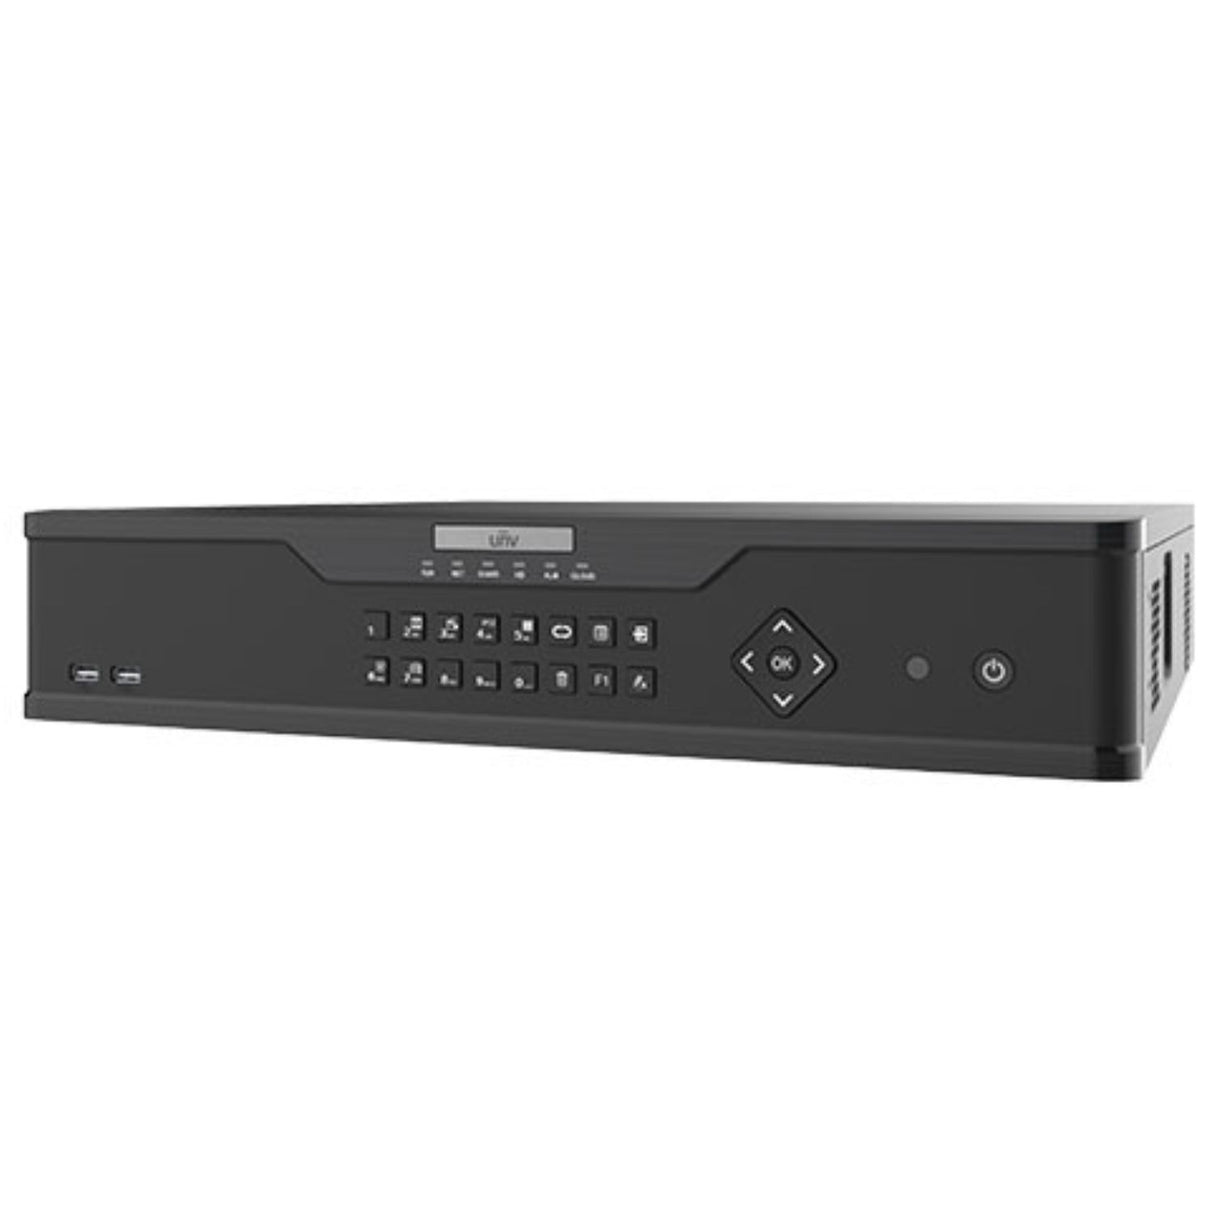 Uniview 32CH Network Video Recorder:  12MP, 384MBPS,  4- SATA HDD RAID NVR, Prime Series - NVR304-32X